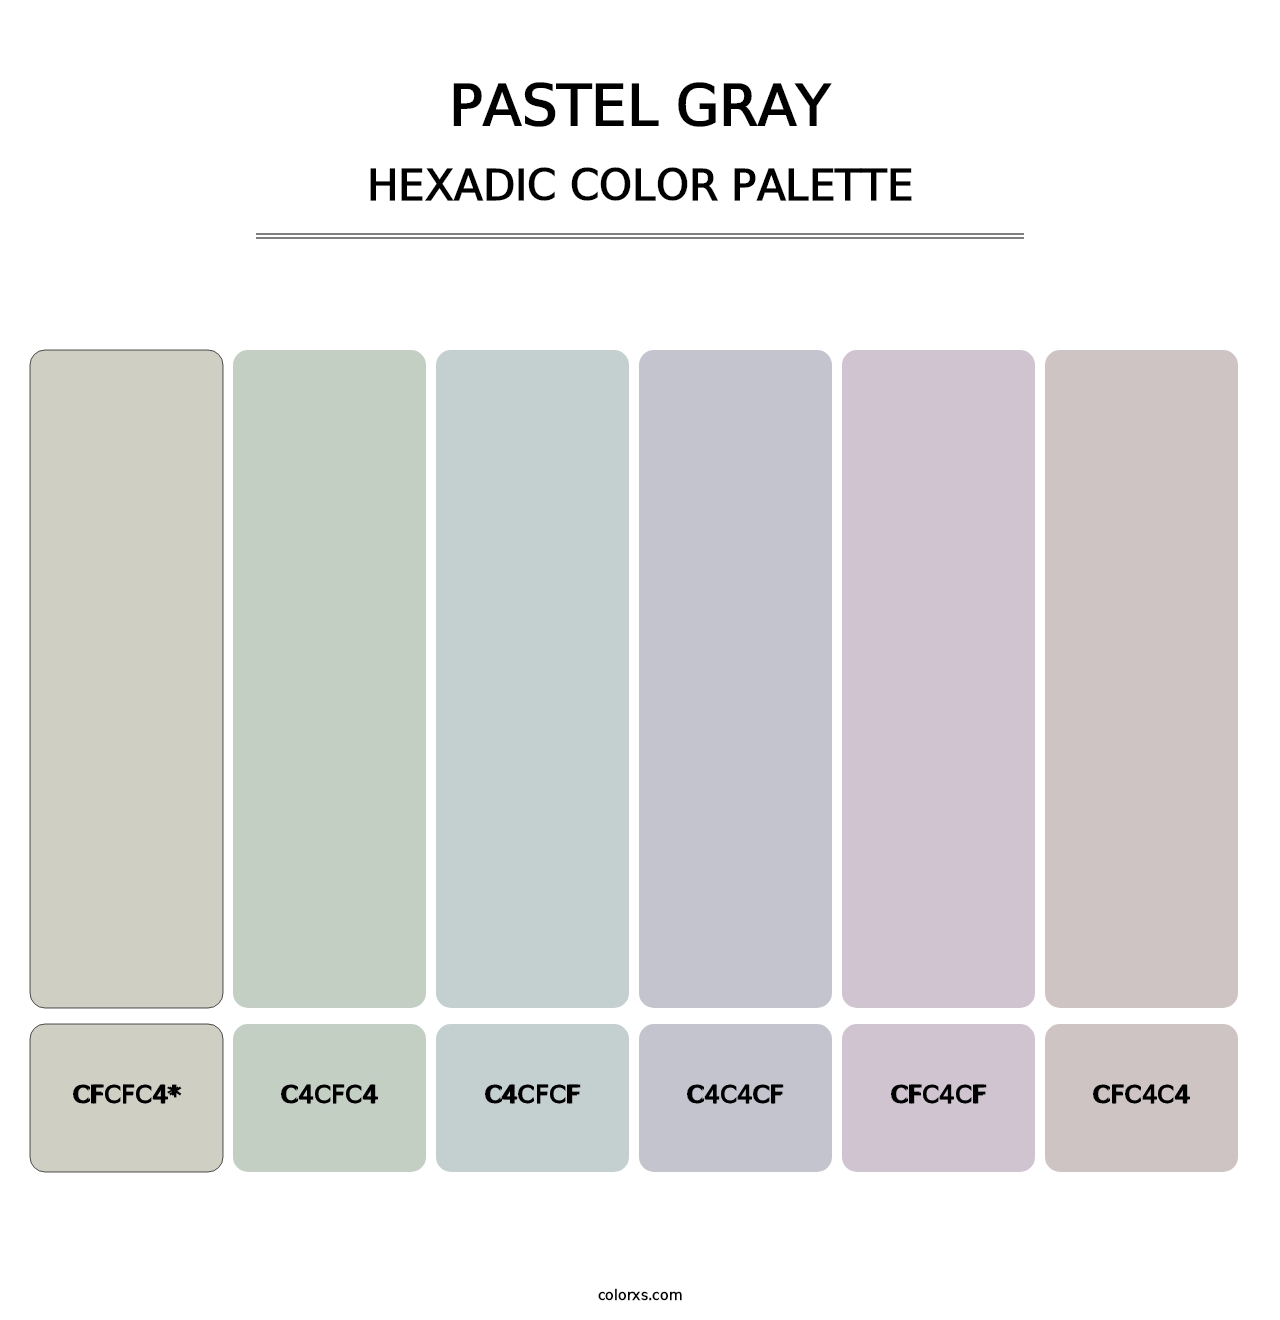 Pastel Gray - Hexadic Color Palette